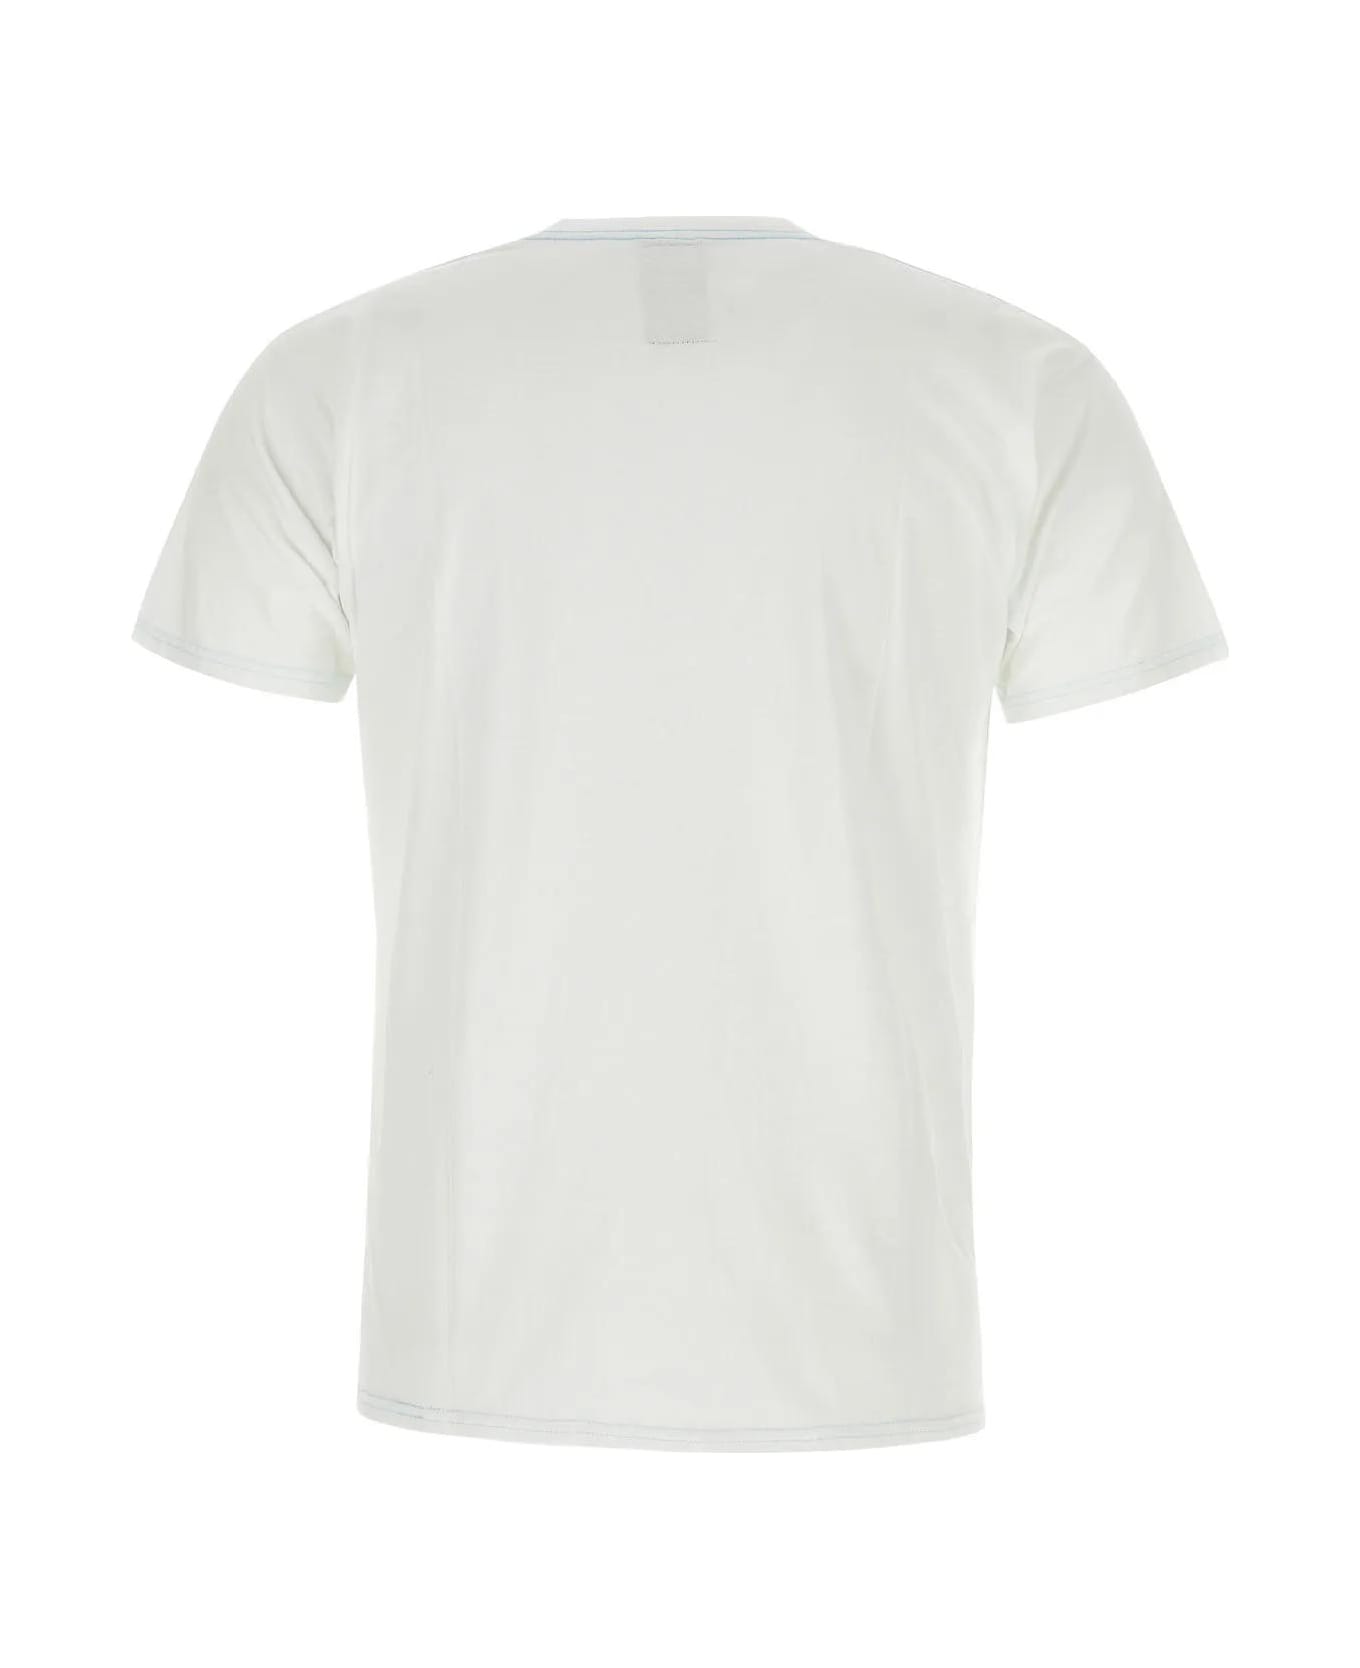 Wild Donkey White Cotton T-shirt - Eswsky Washed Sky シャツ